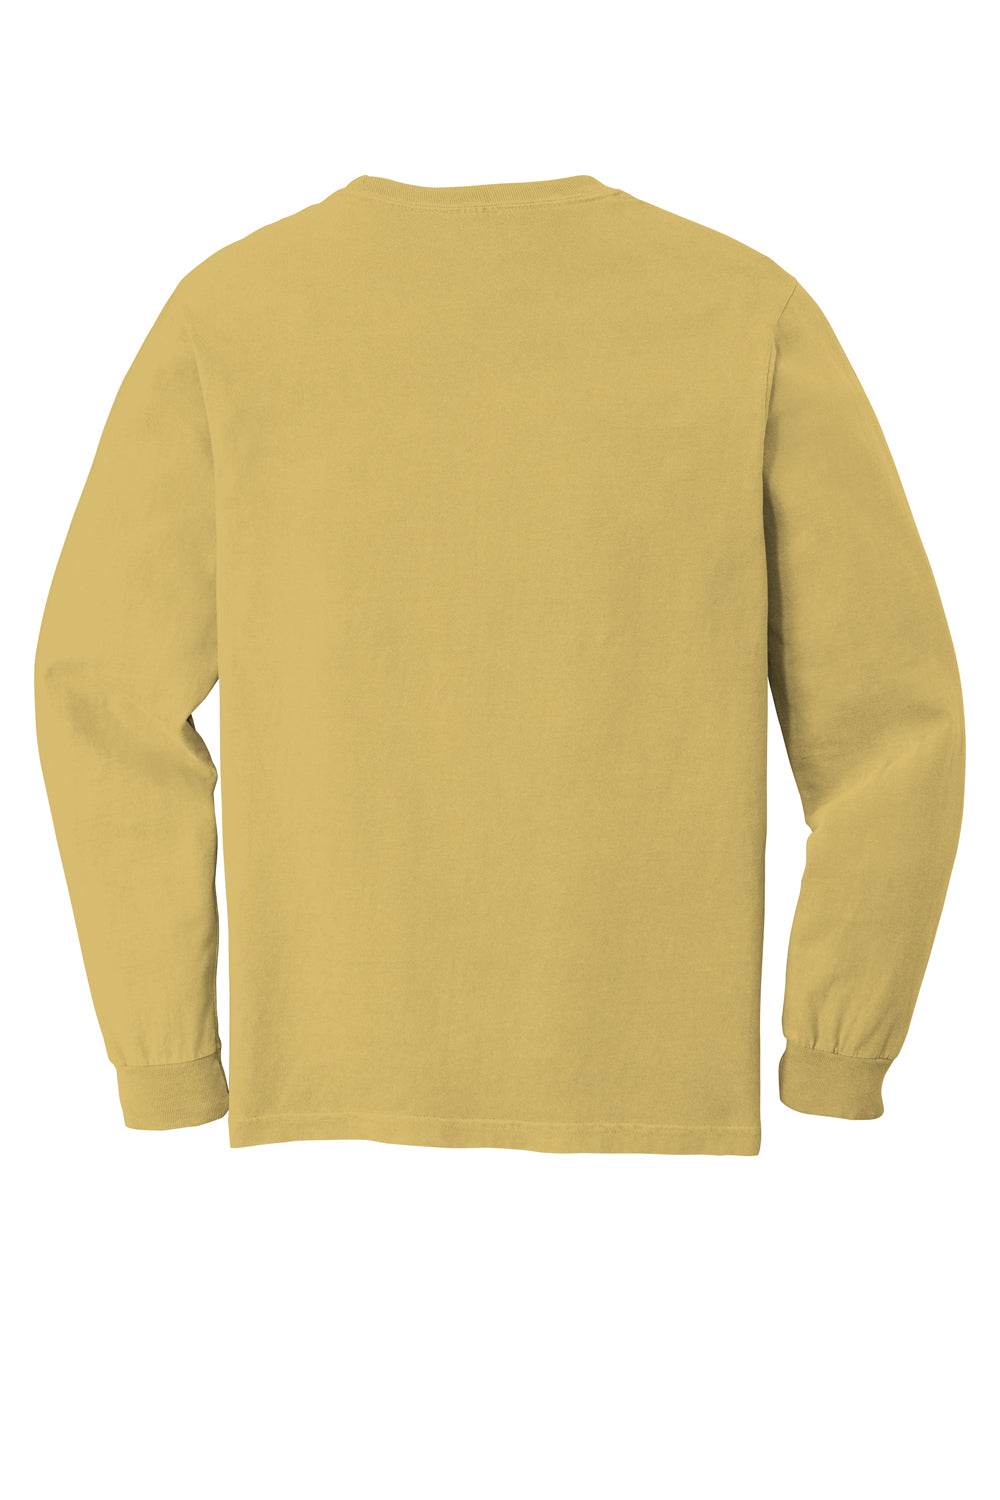 Comfort Colors 6014/C6014 Mens Long Sleeve Crewneck T-Shirt Mustard Yellow Flat Back